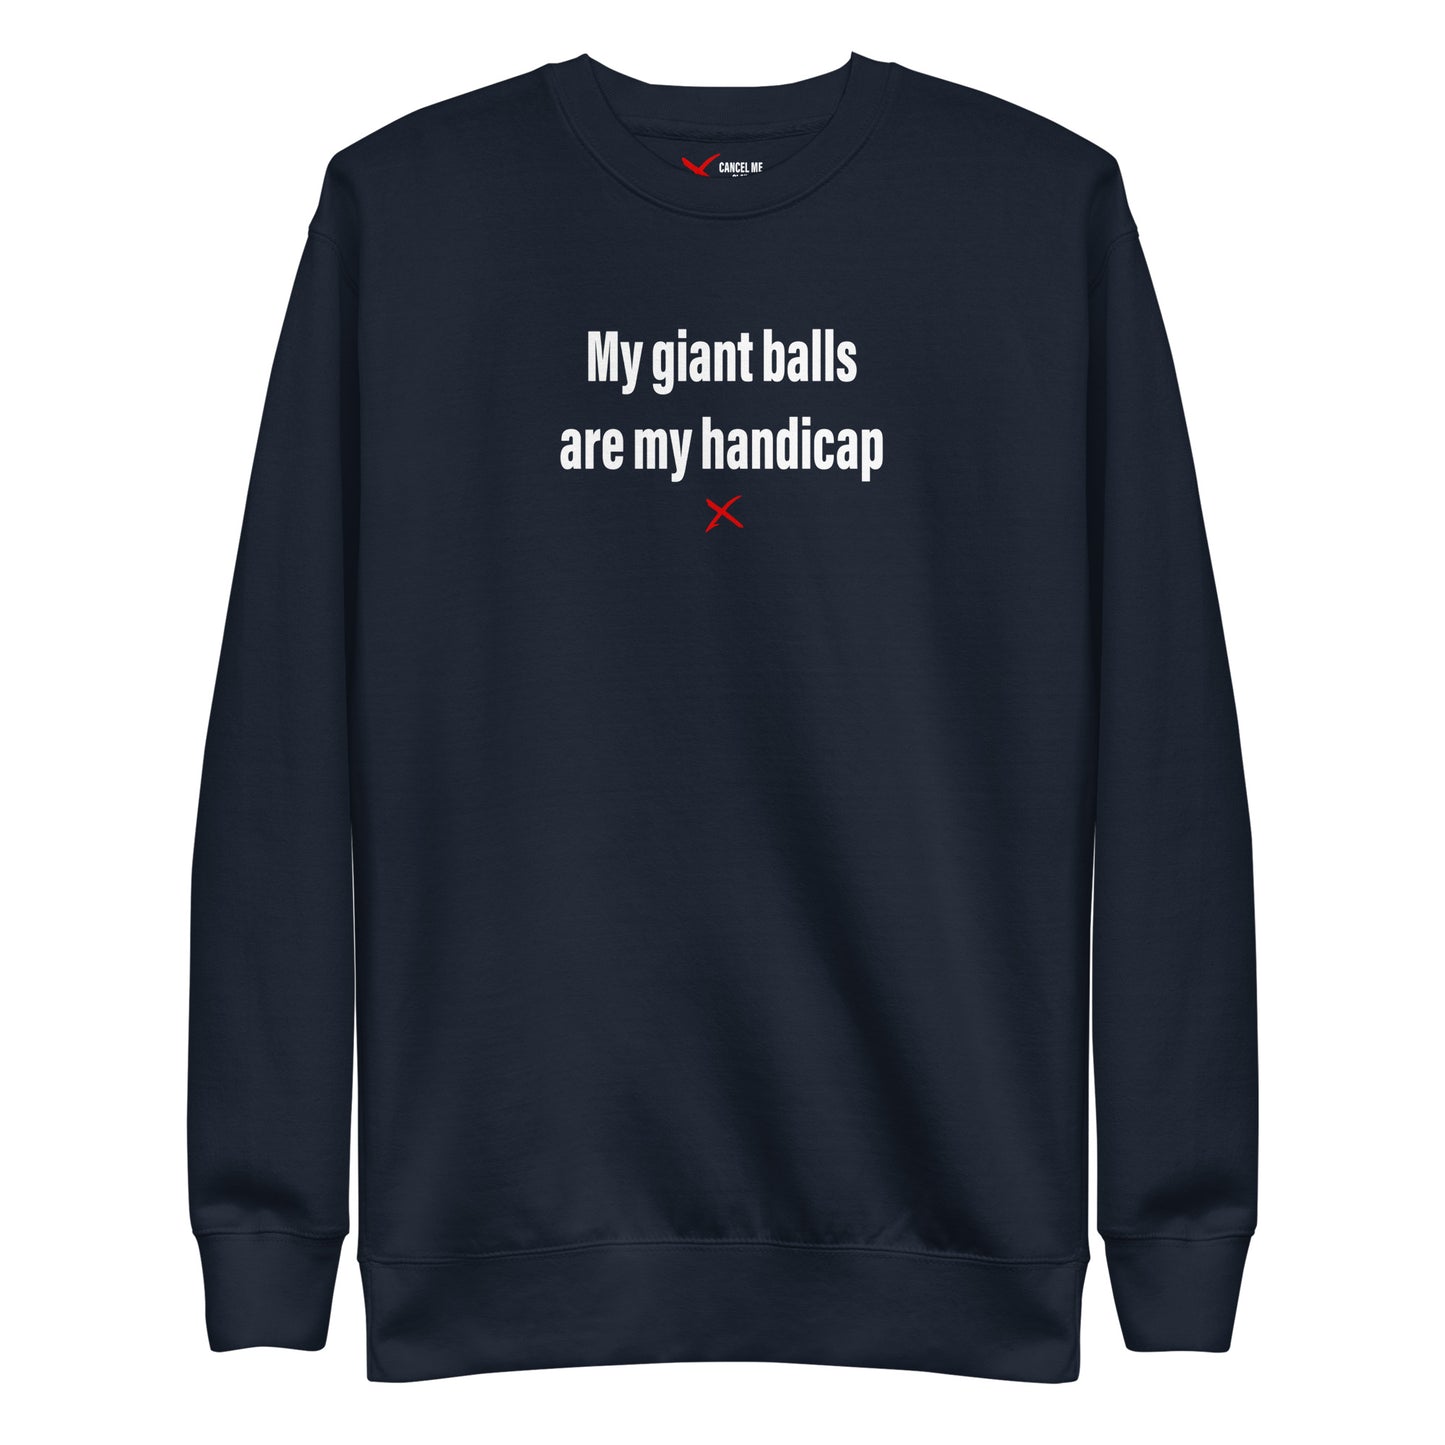 My giant balls are my handicap - Sweatshirt